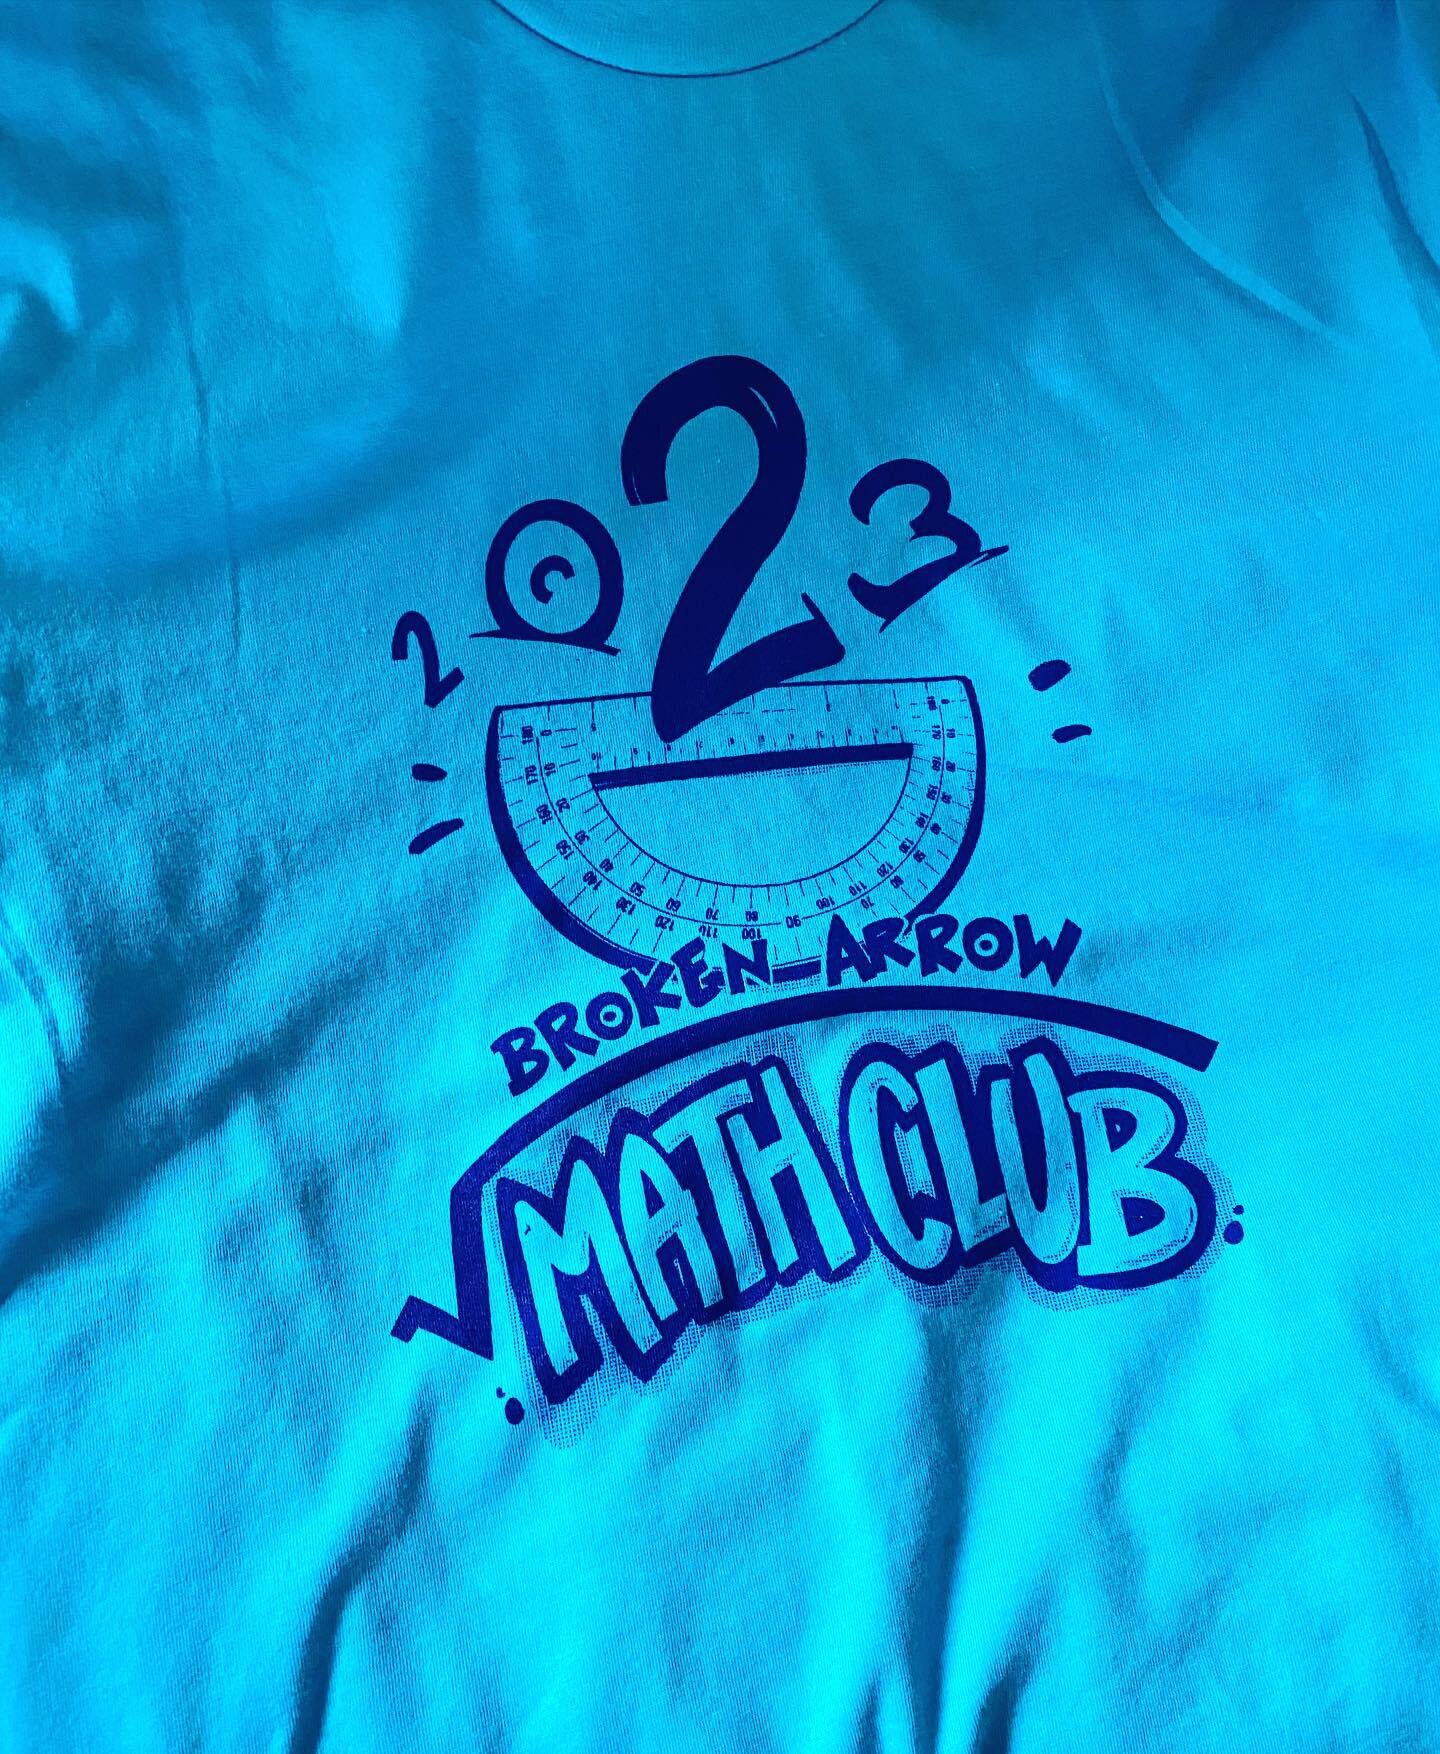 Math Club!